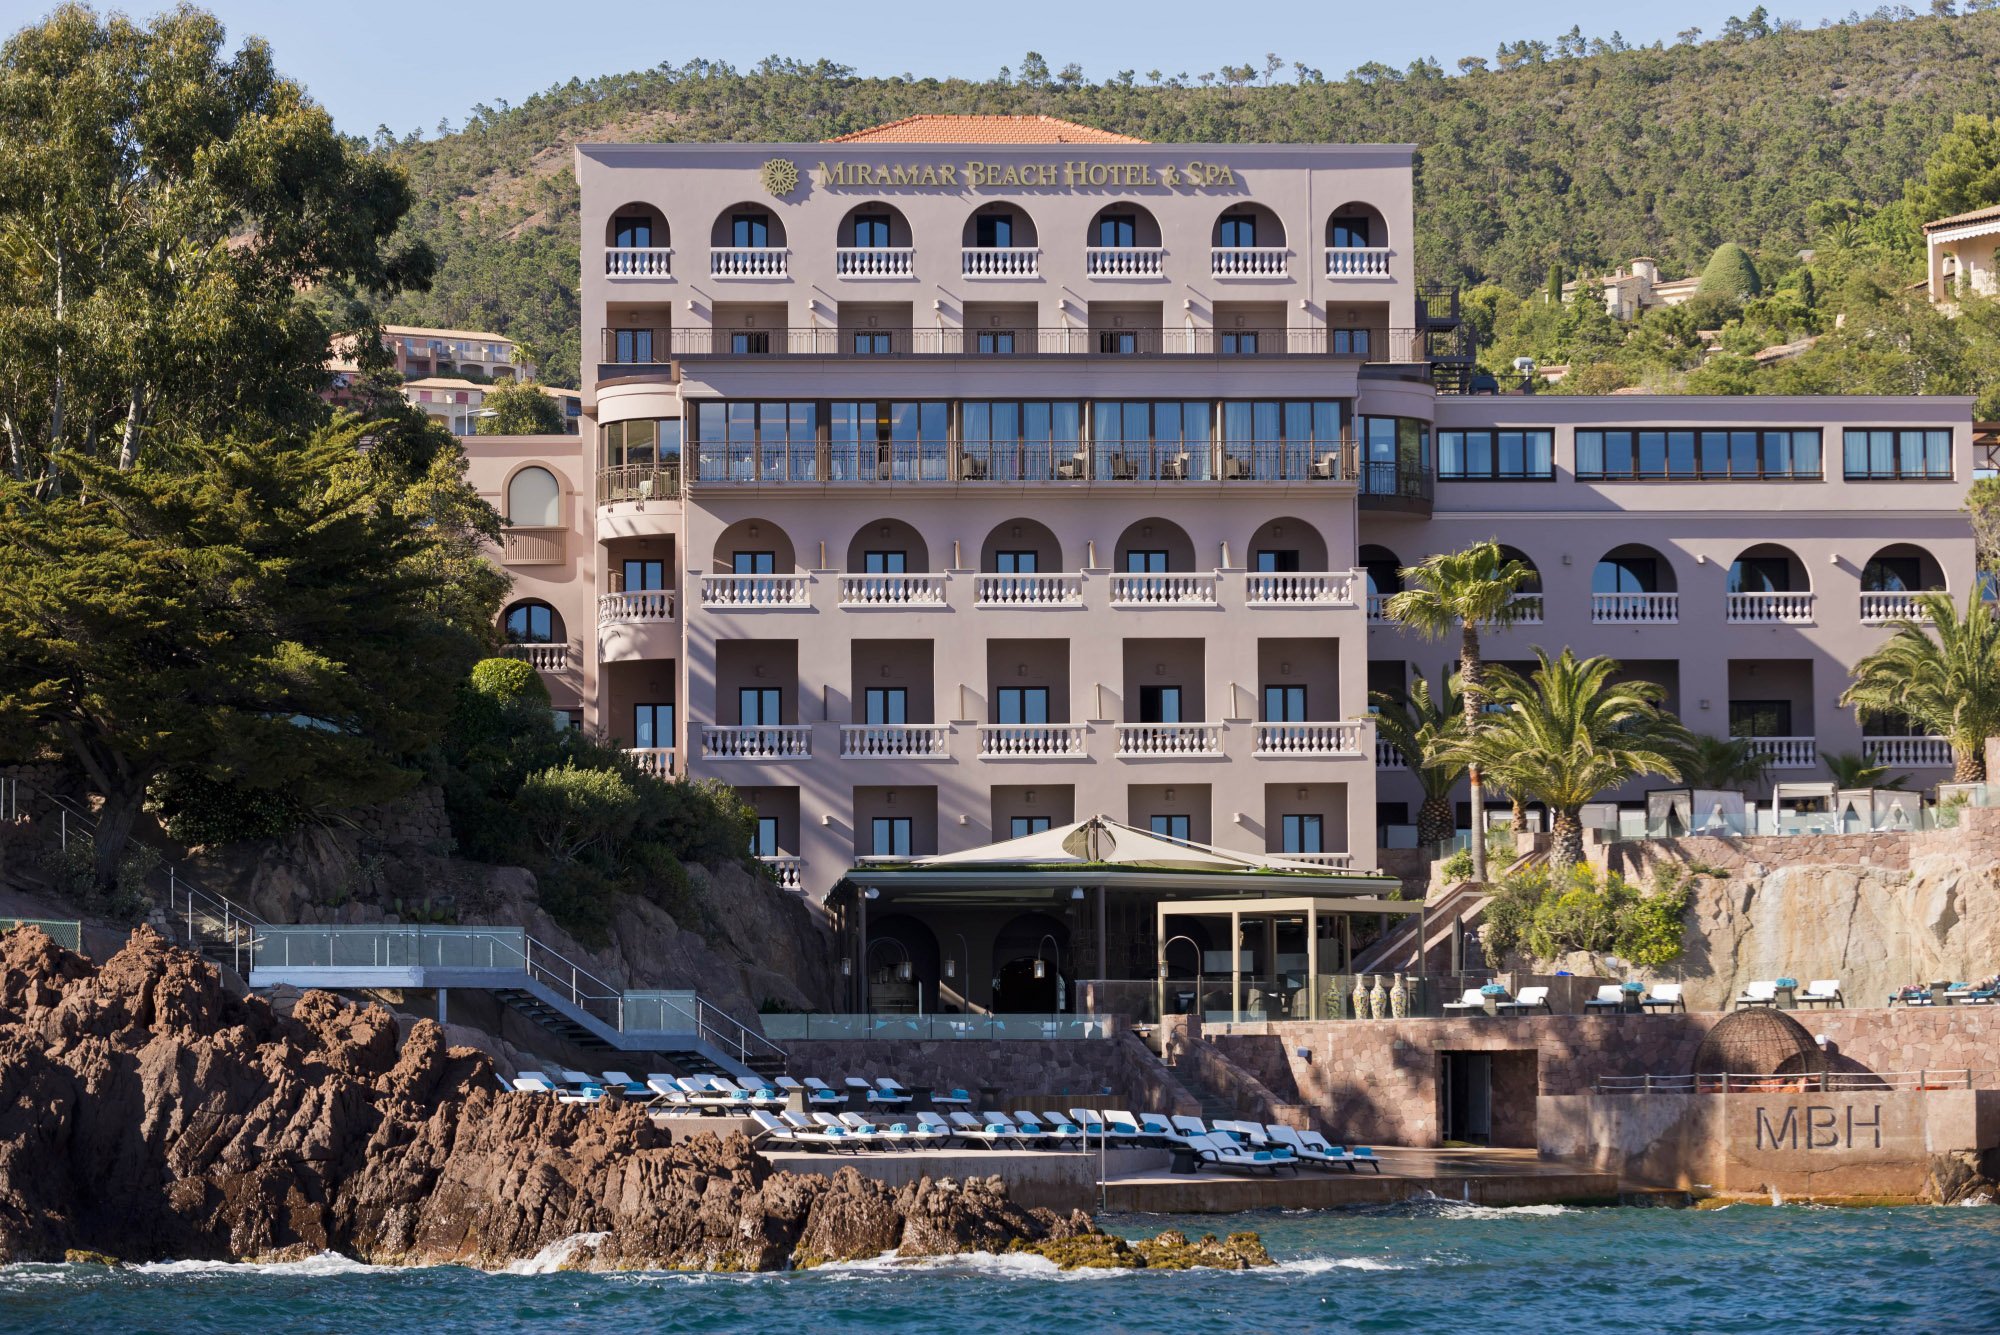 Miramar Beach Hôtel & Spa | Luxury hotel for MIPCOM